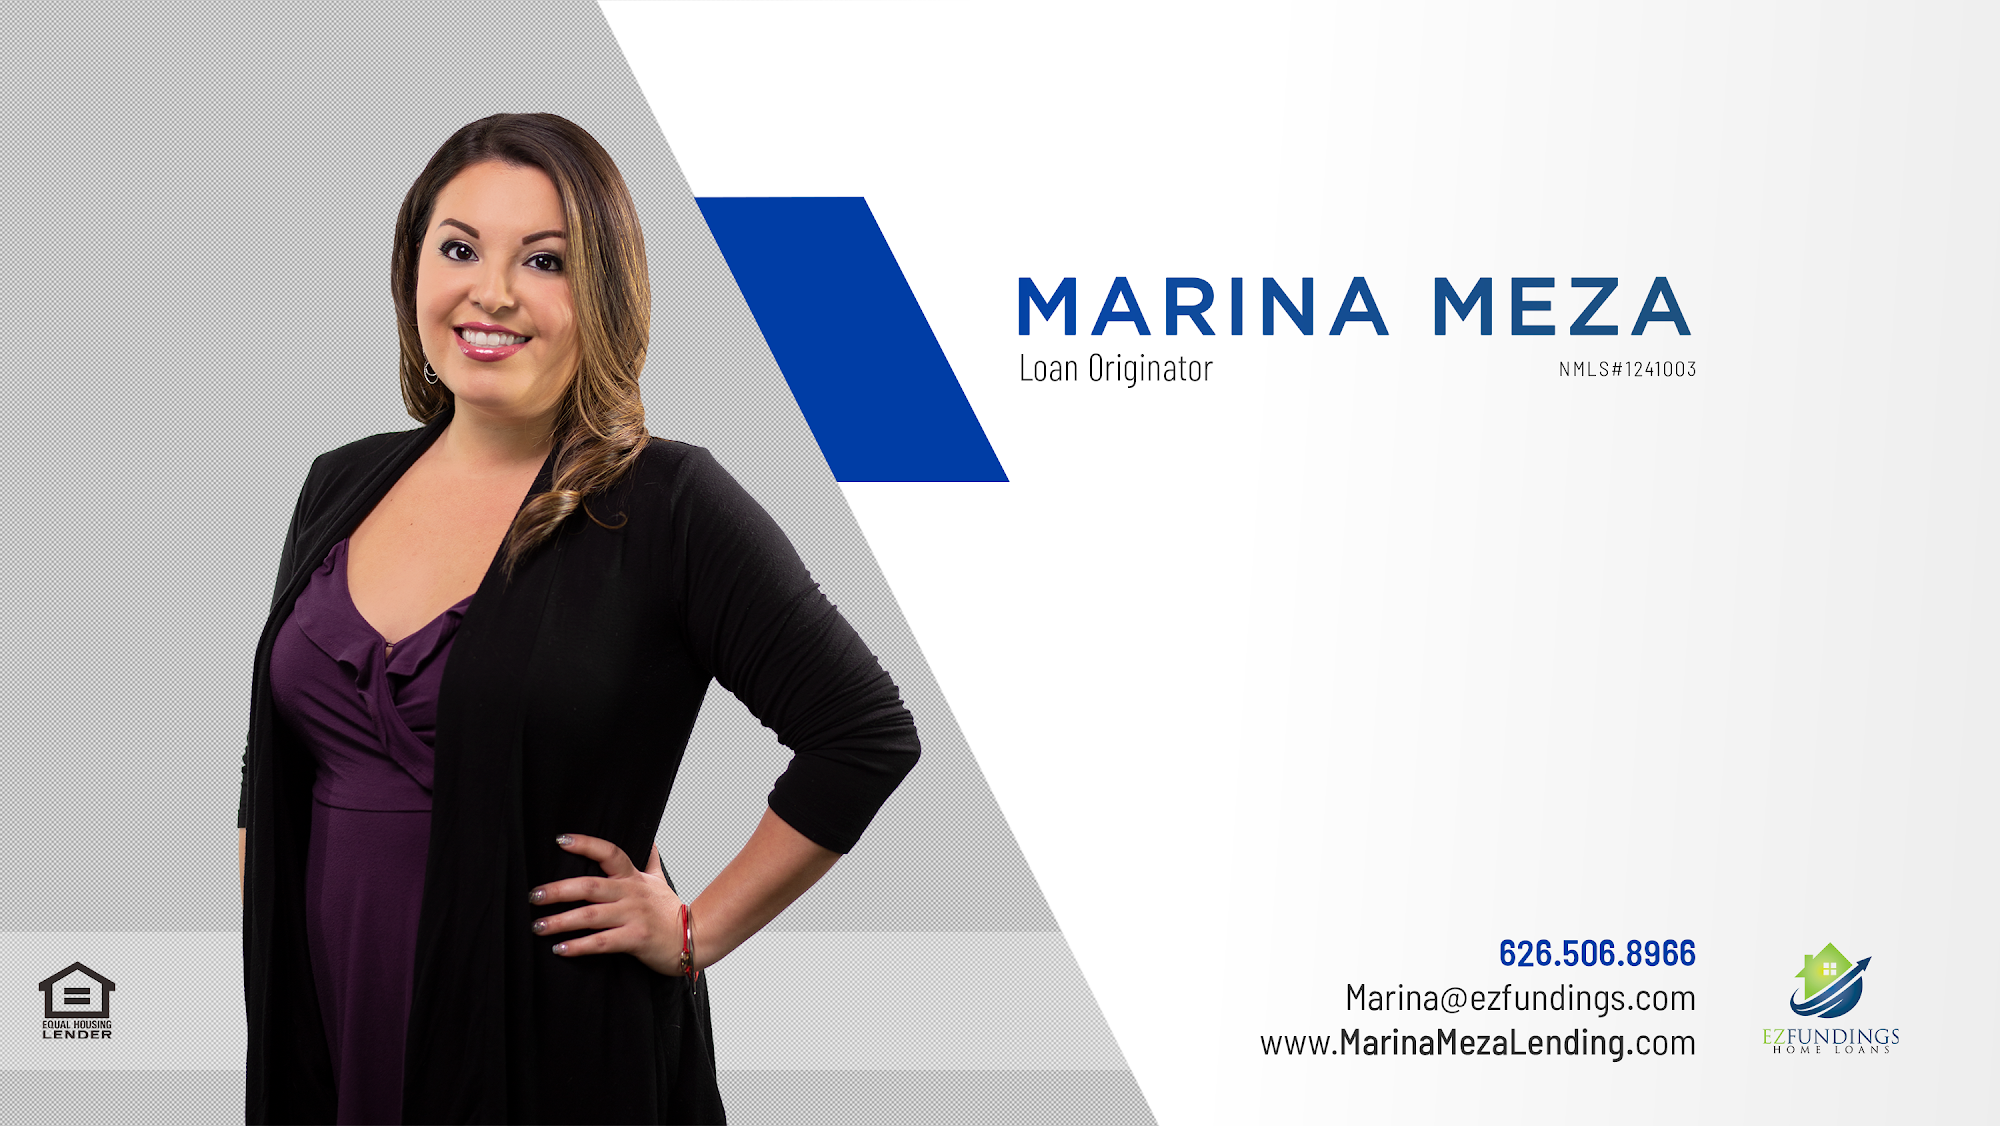 Marina Meza - Loan Originator